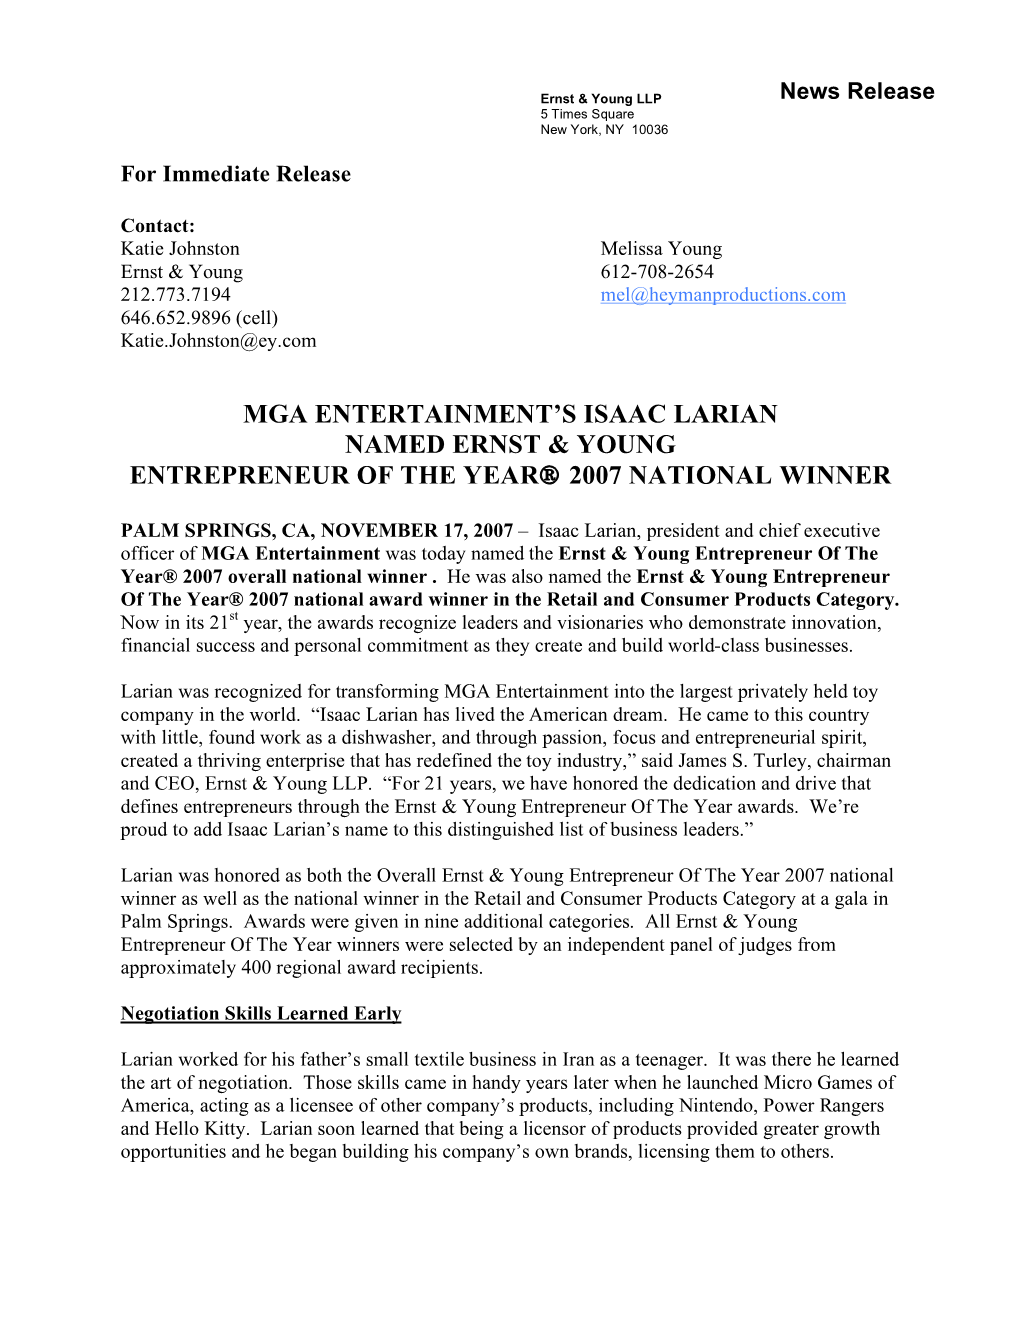 Mga Entertainment's Isaac Larian Named Ernst & Young